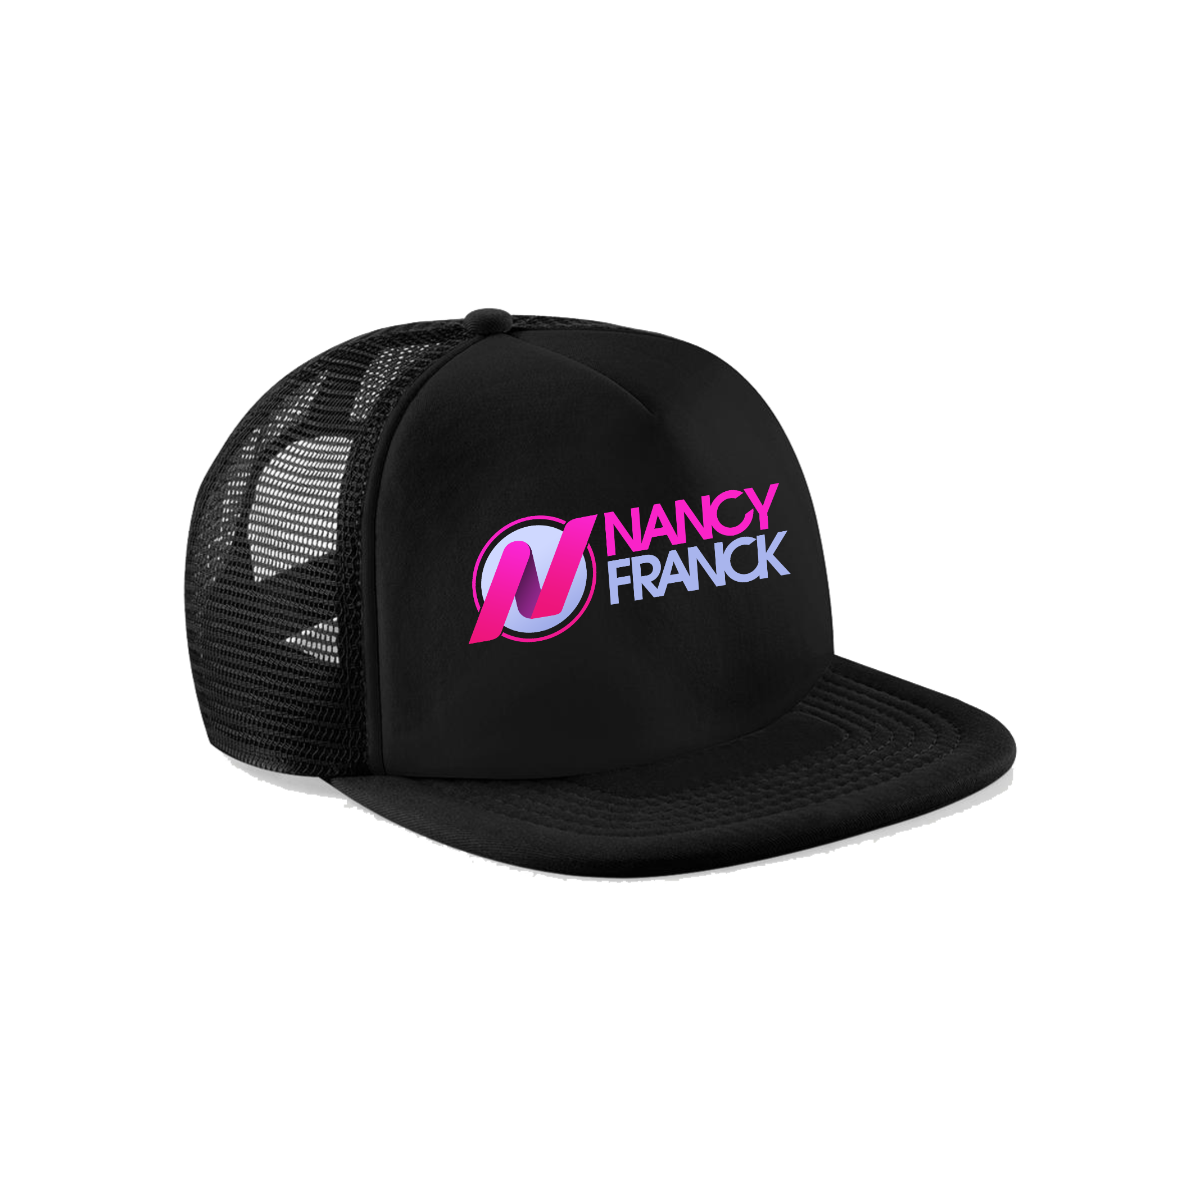 Cap "NANCY FRANCK Logo" schwarz